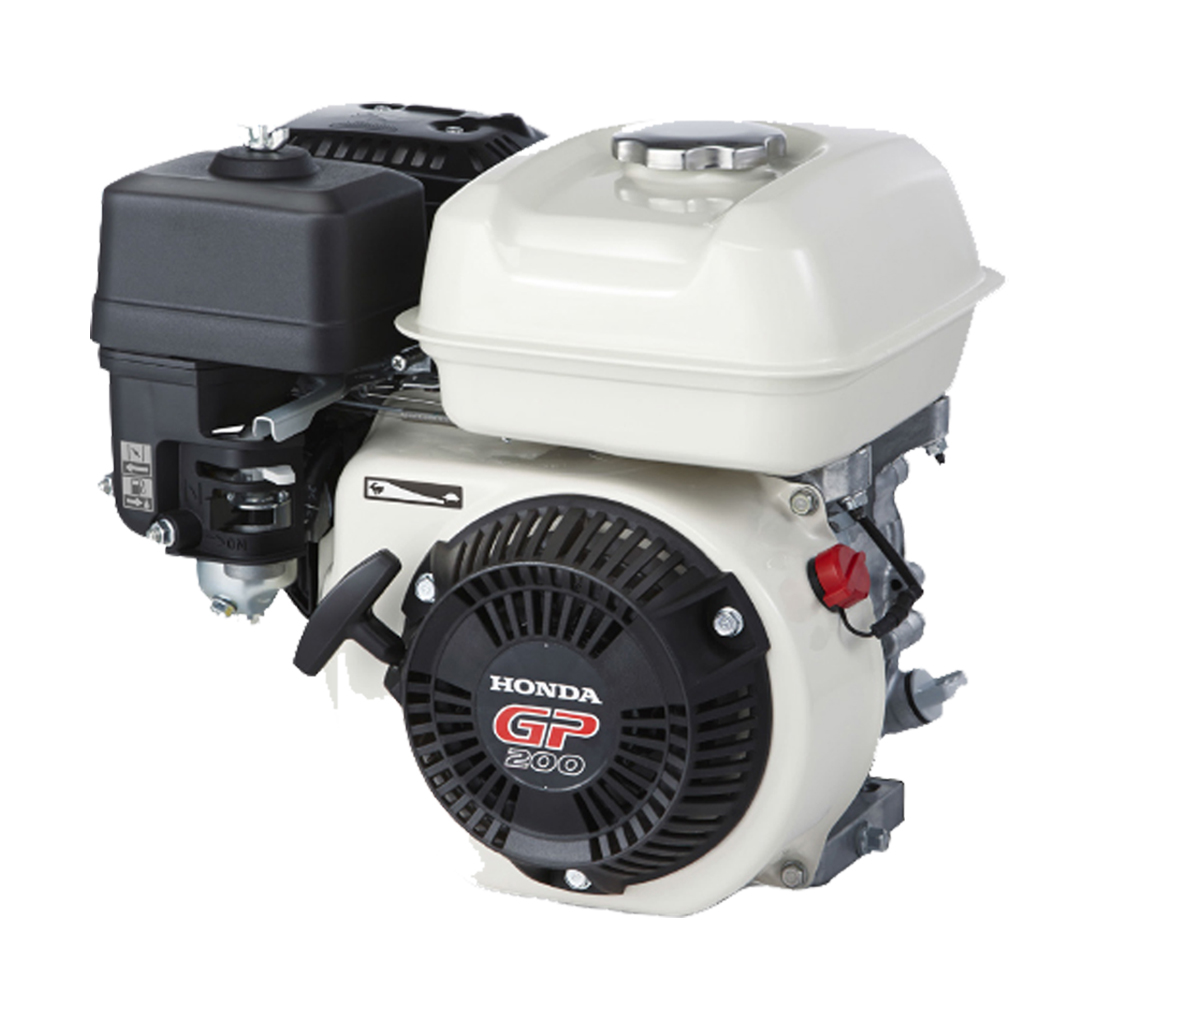 "Honda Petrol Engine (White) Recoil, 6.5 HP, Horizontal